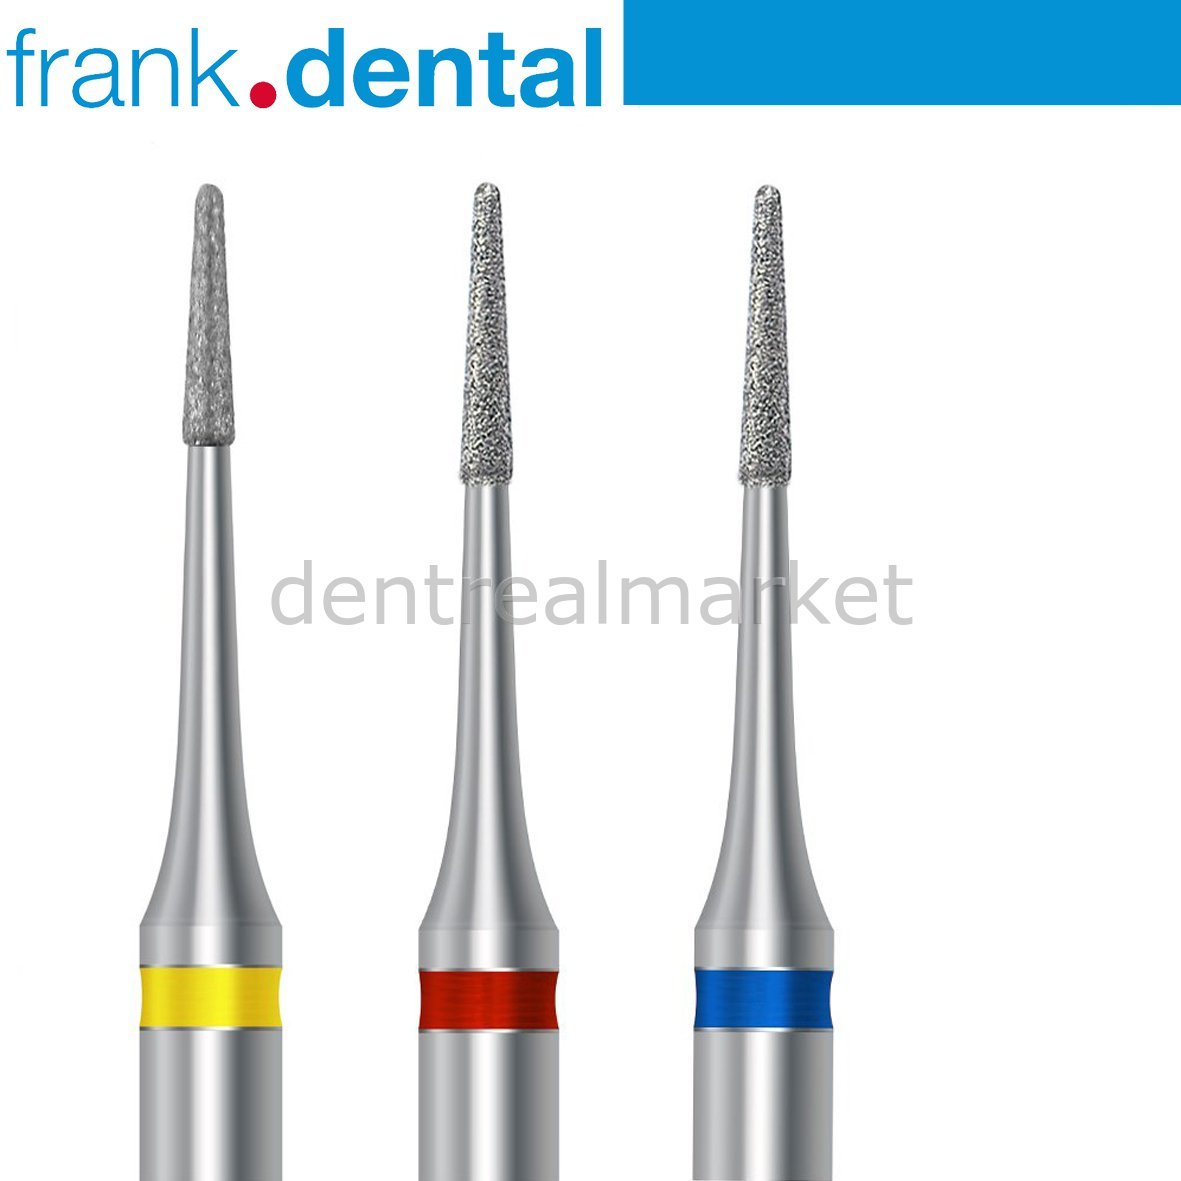 DentrealStore - Frank Dental Natural Diamond Perio Bur - Periodontal Bur 831 - 1 Pcs